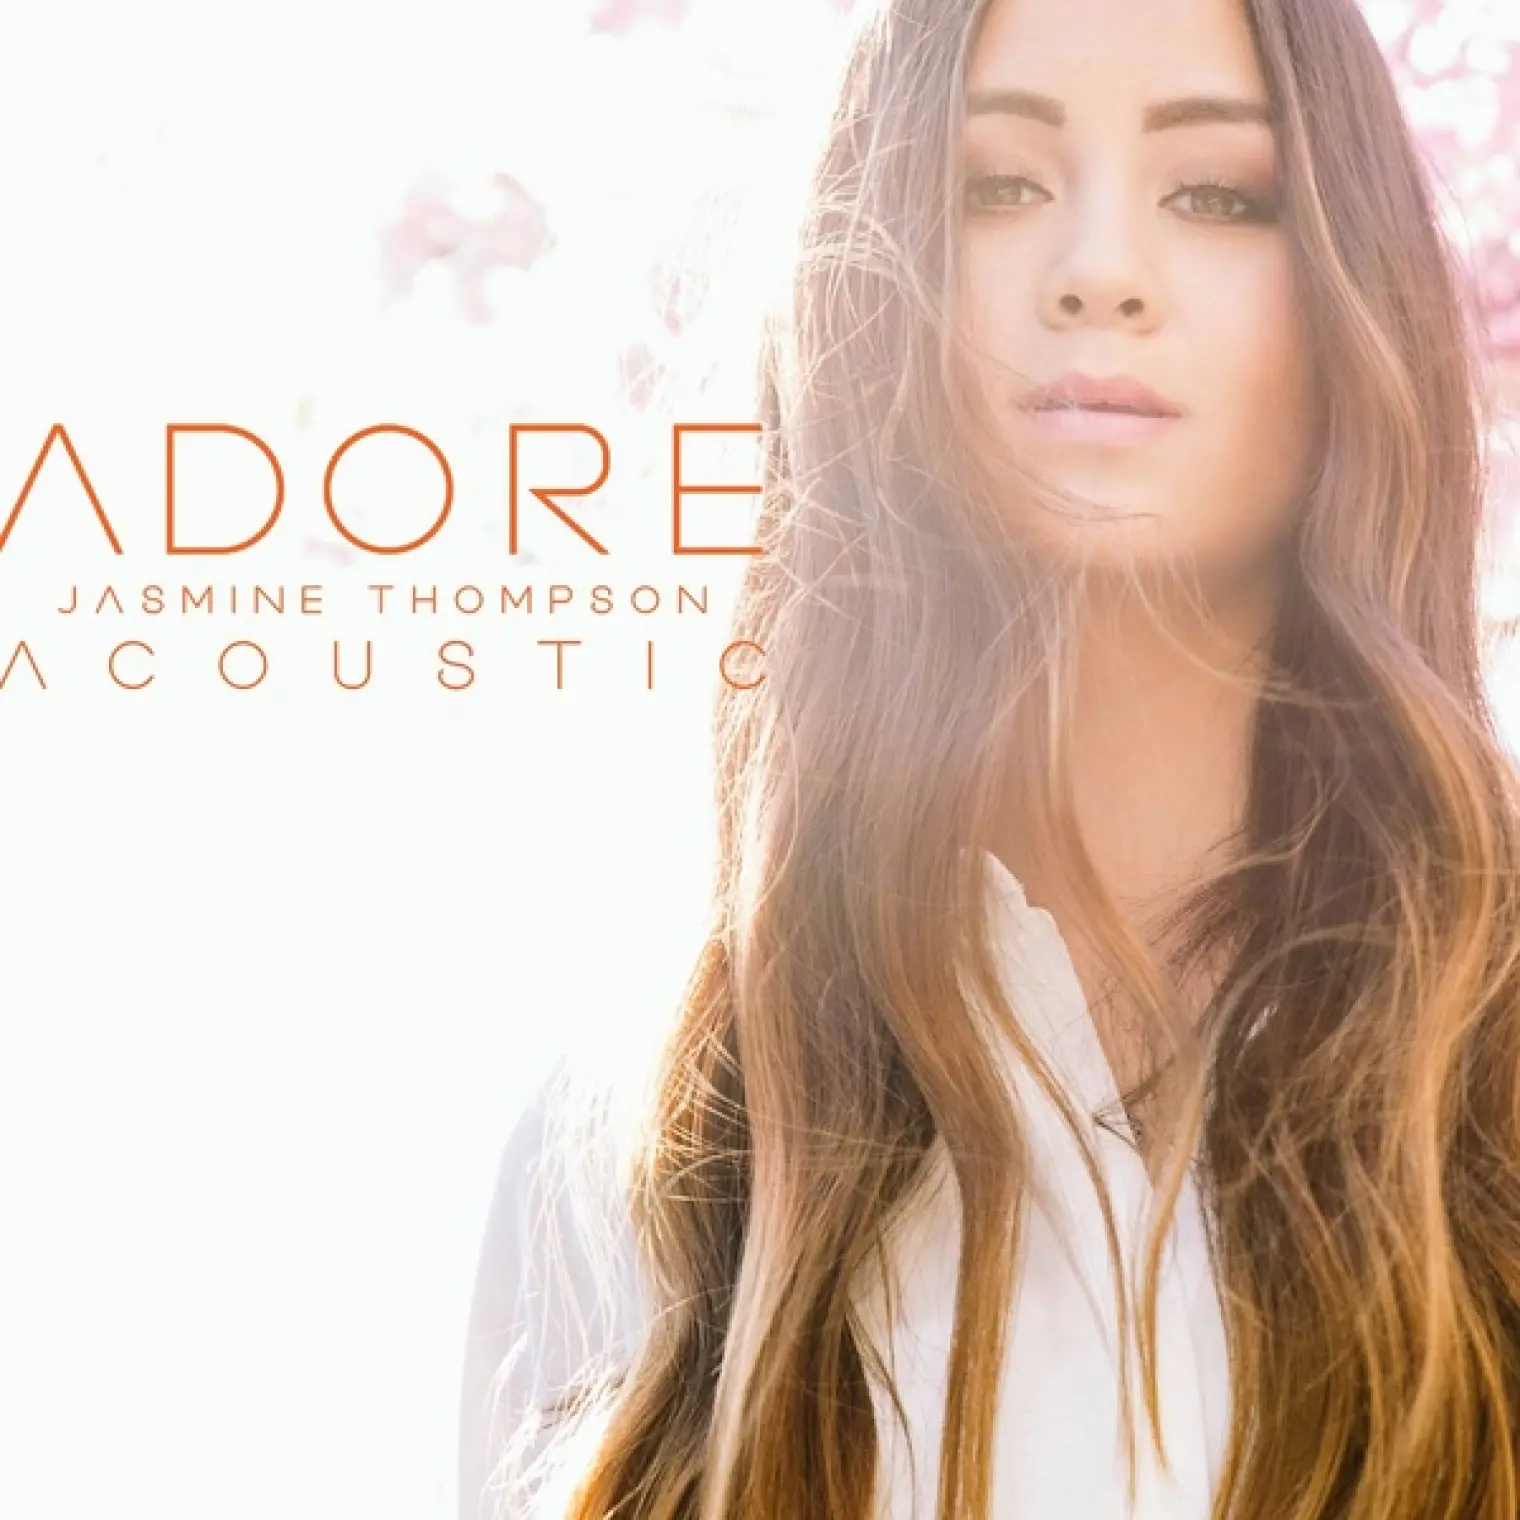 Adore (Acoustic) -  Jasmine Thompson 